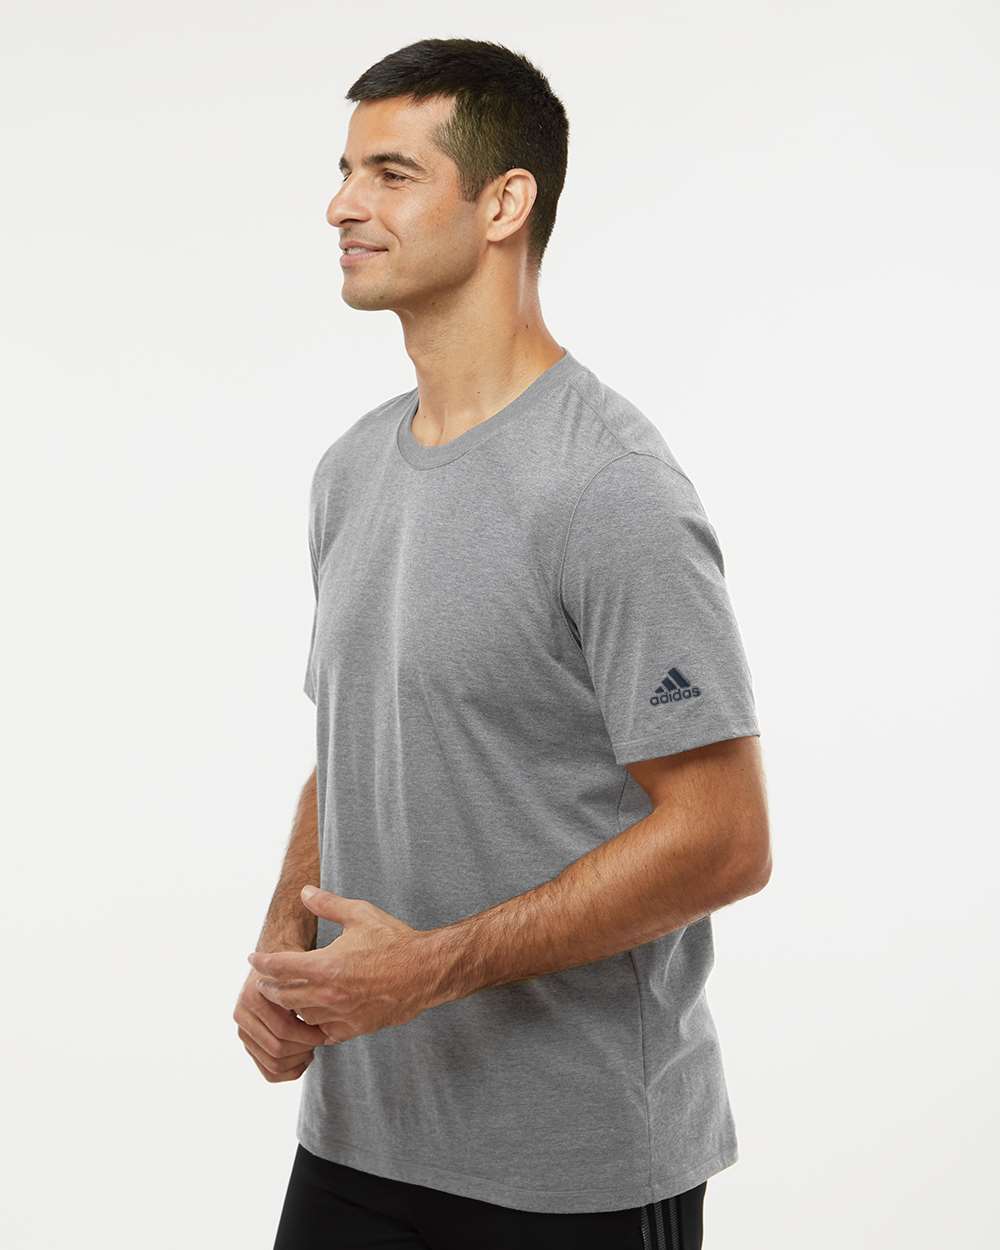 Adidas A556 Blended T-Shirt #colormdl_Medium Grey Heather